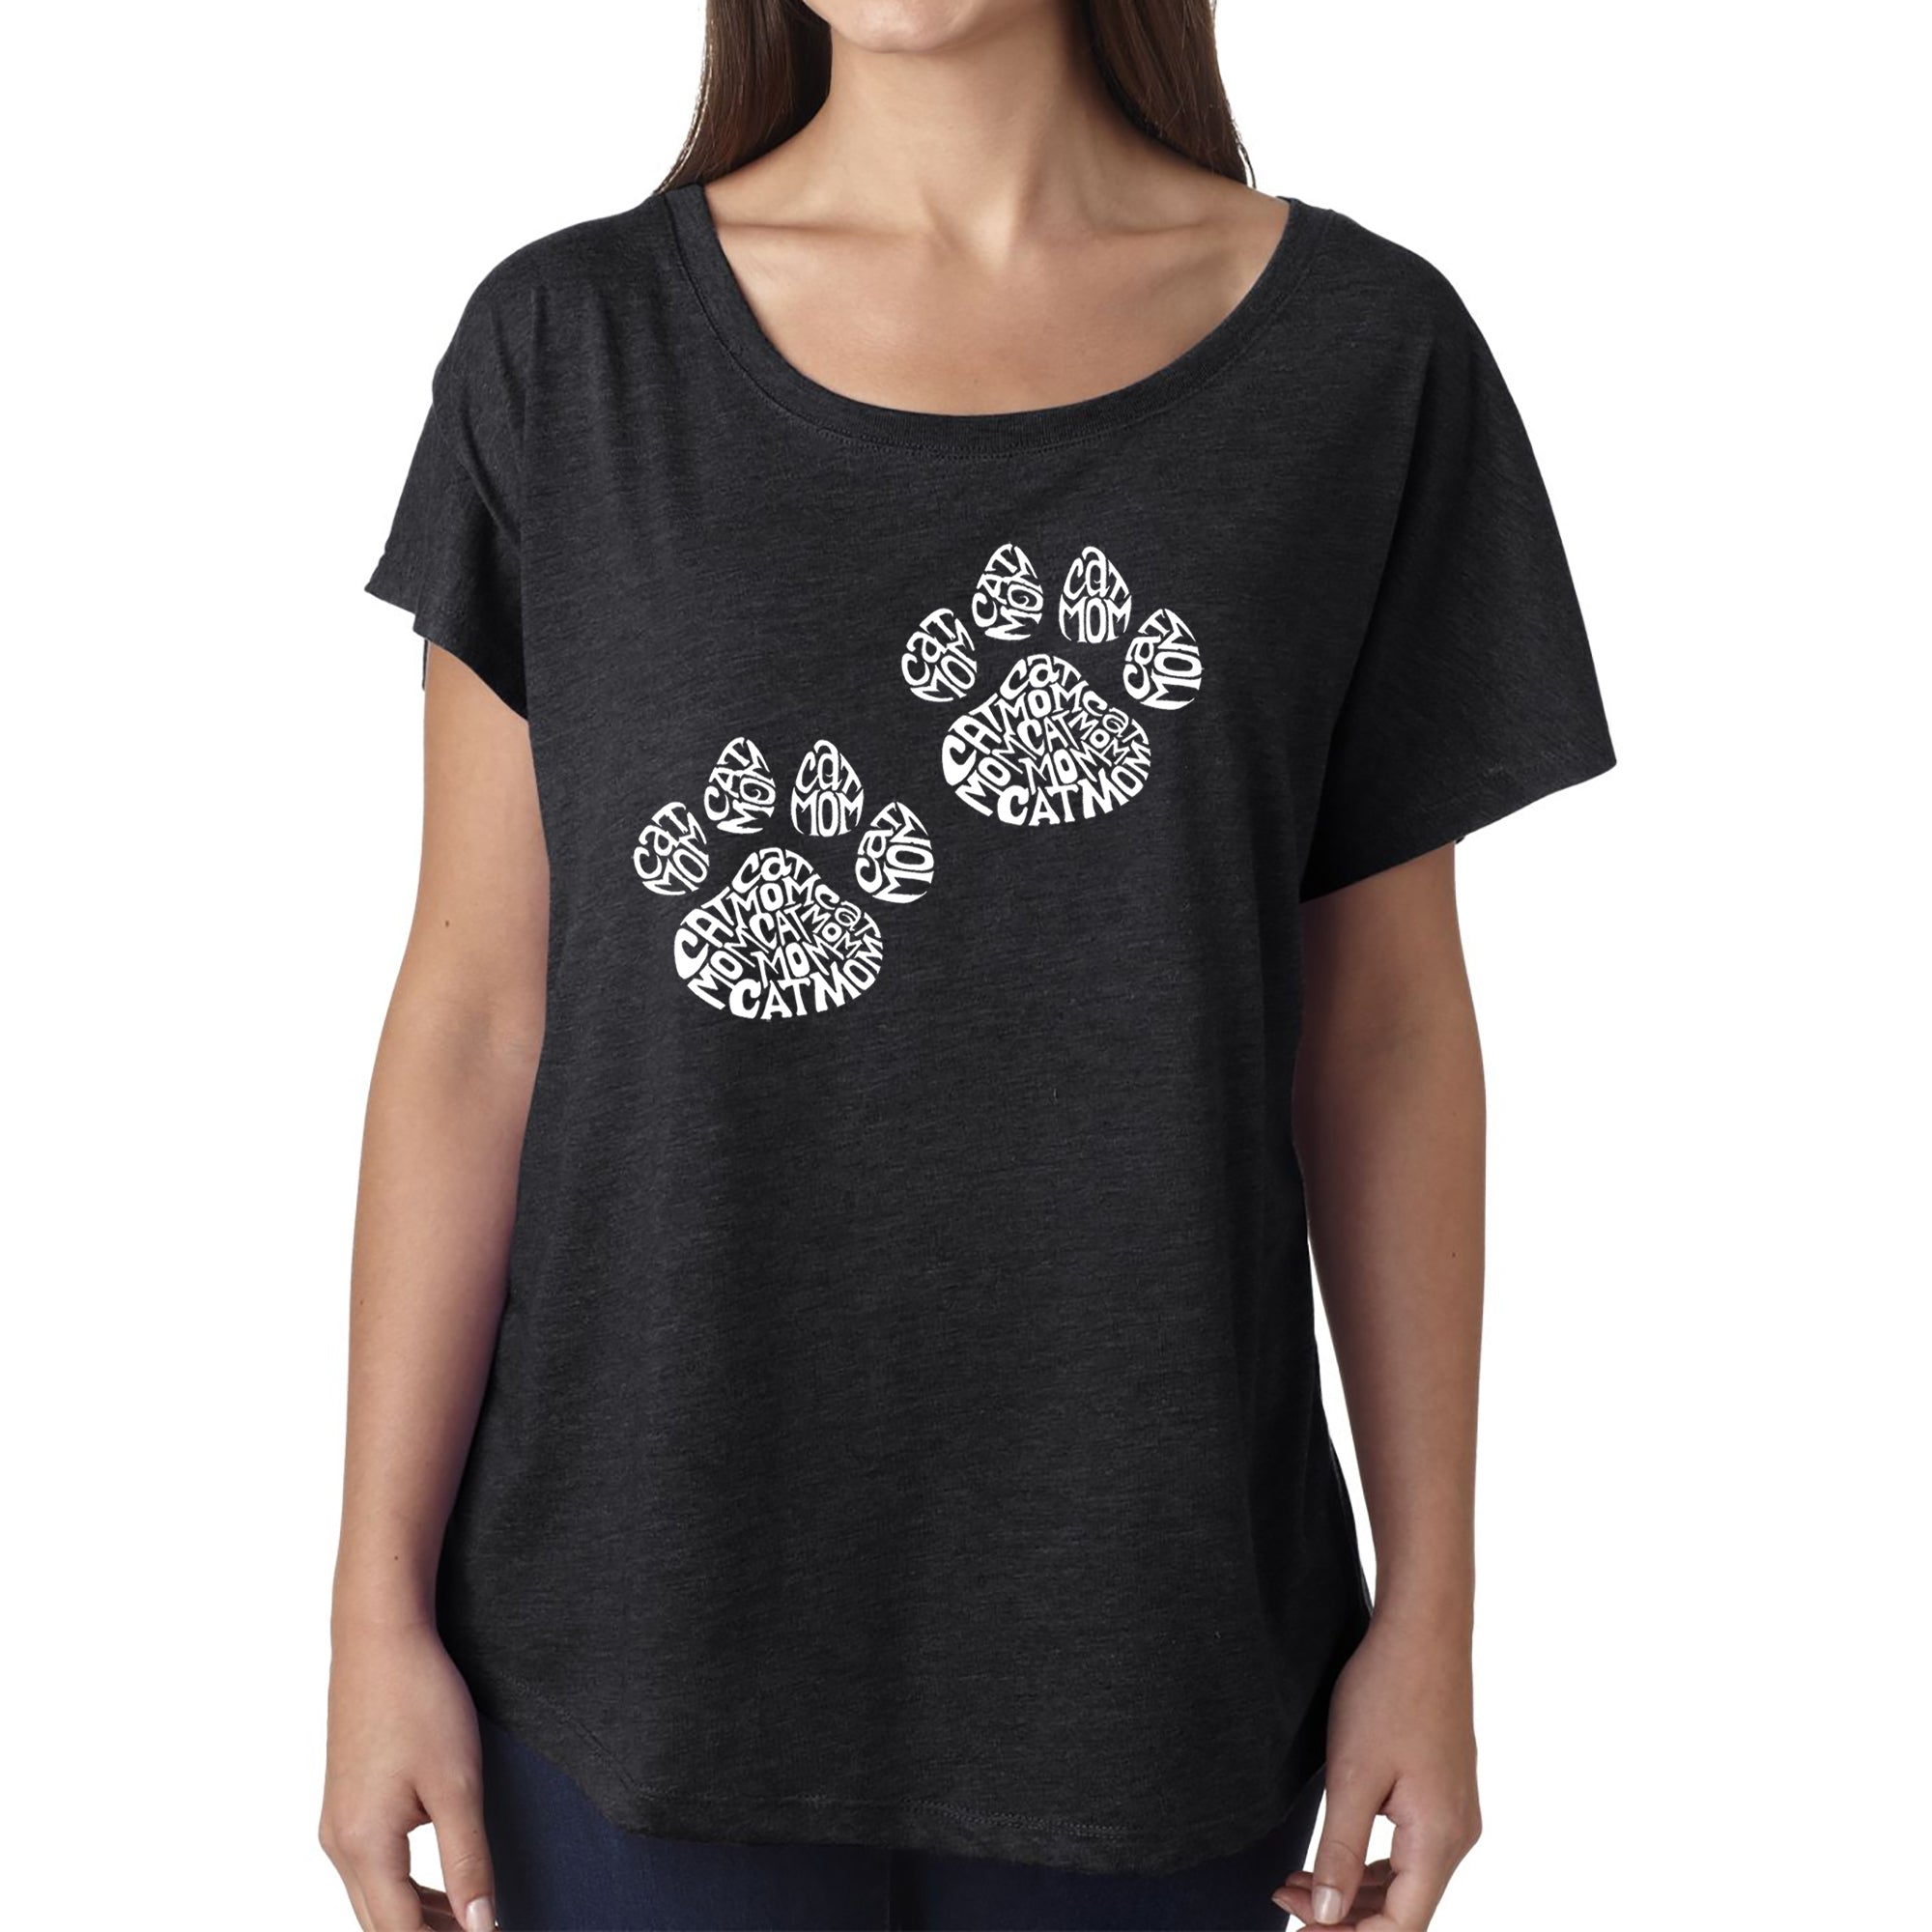 Cat Mom - Women's Loose Fit Dolman Cut Word Art Shirt - Navy - X-Large